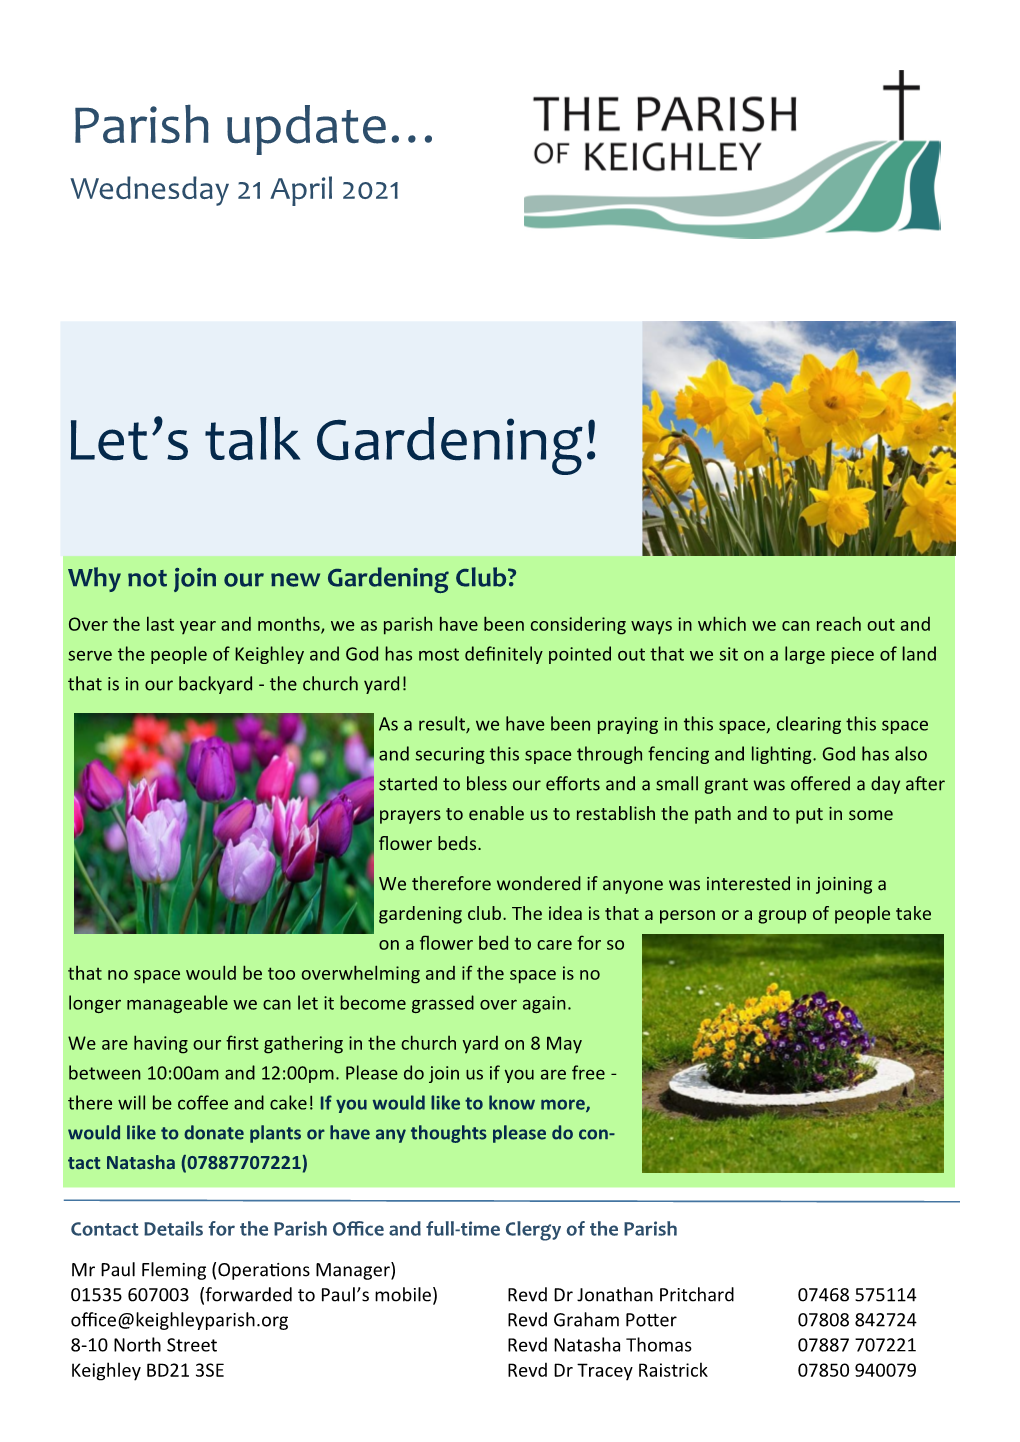 Let's Talk Gardening!